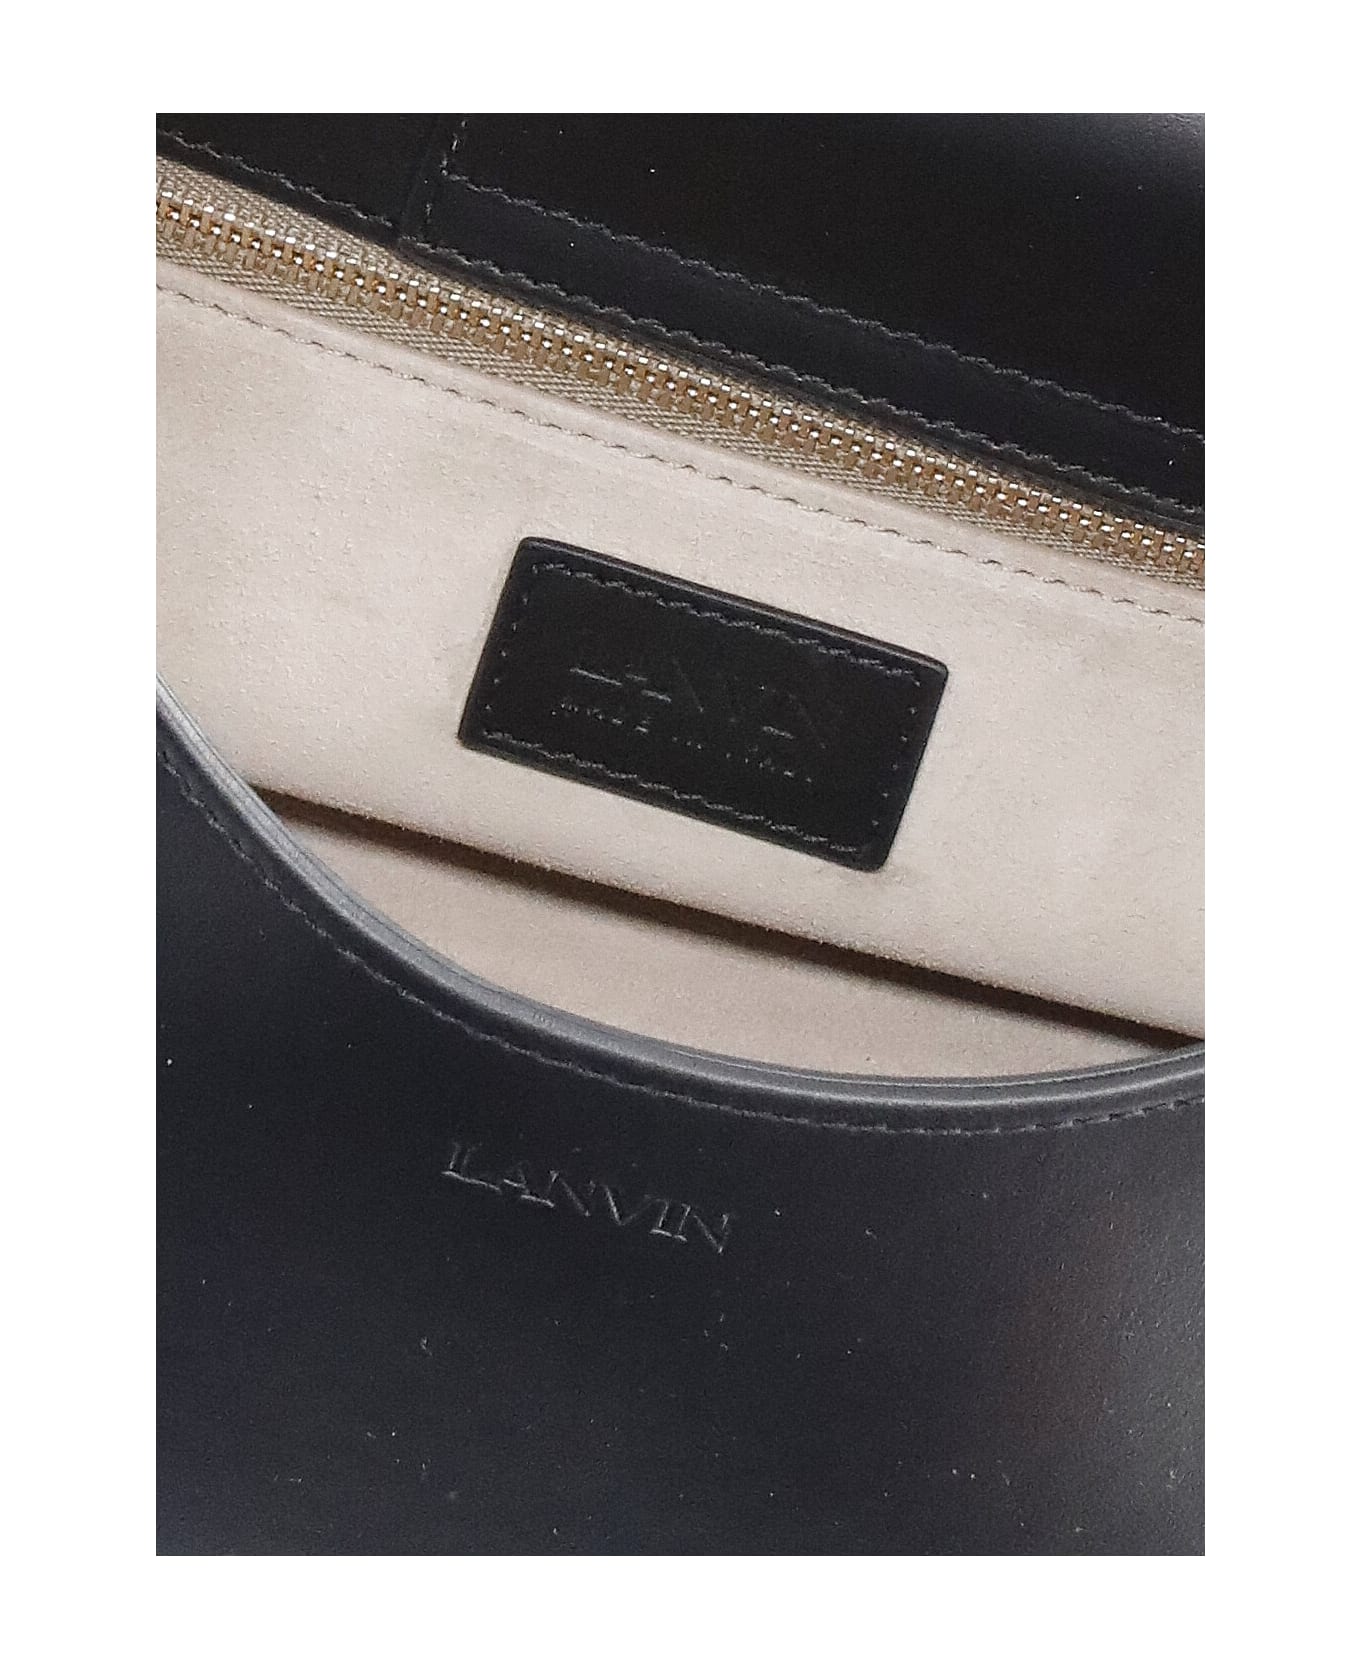 Lanvin Leather Handbag - Black